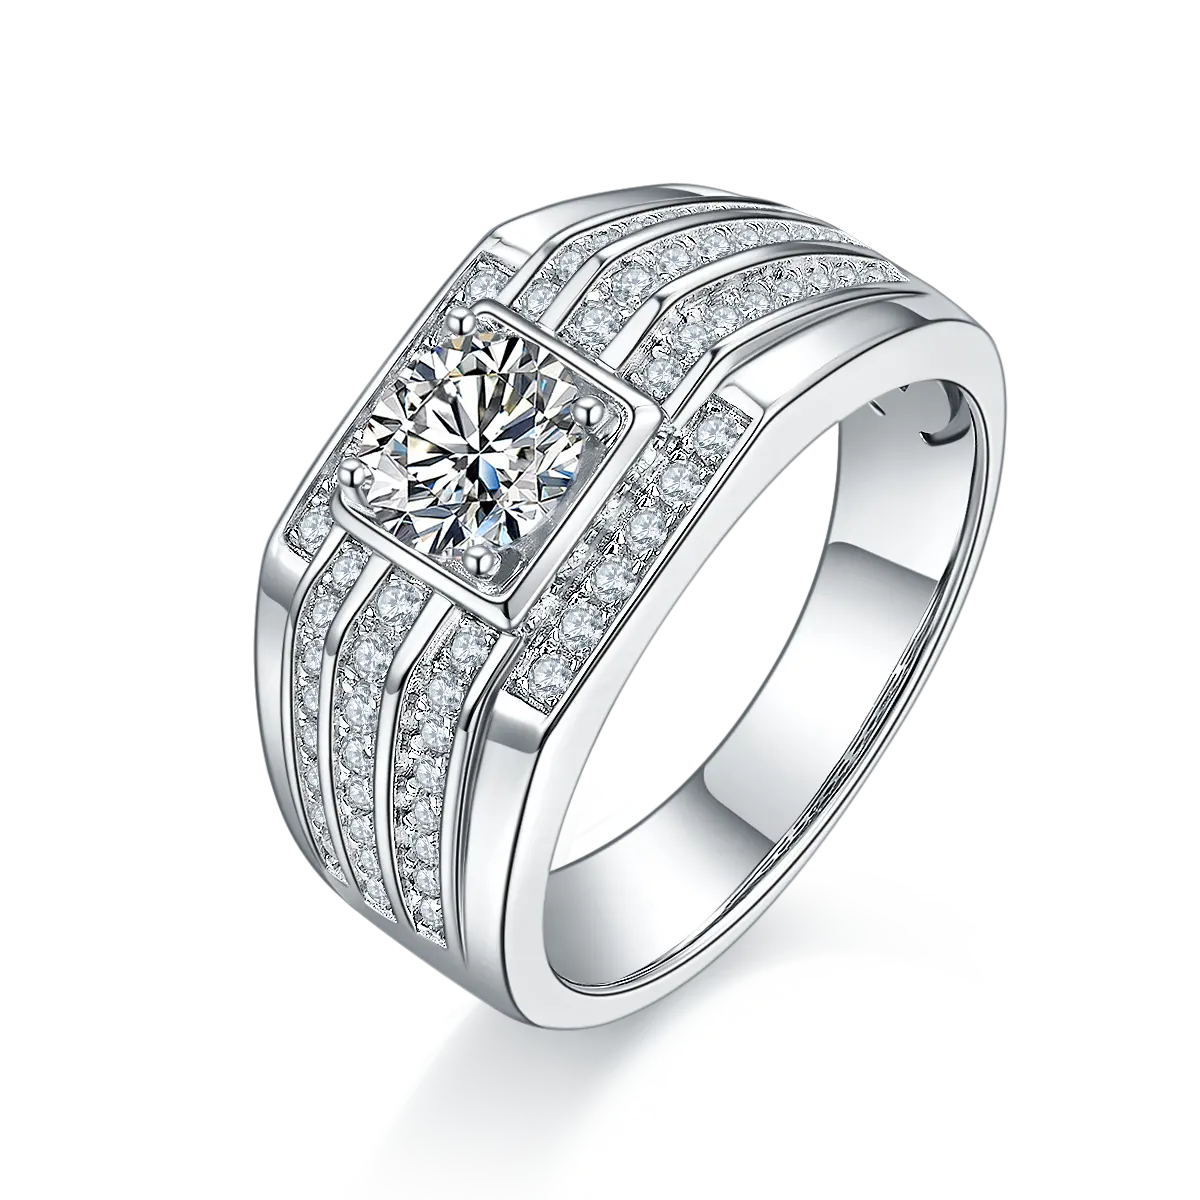 NINE'Sドロップシッピング男性モアッサナイト婚約指輪1ctD VVS1モアッサナイトダイヤモンドS925結婚指輪